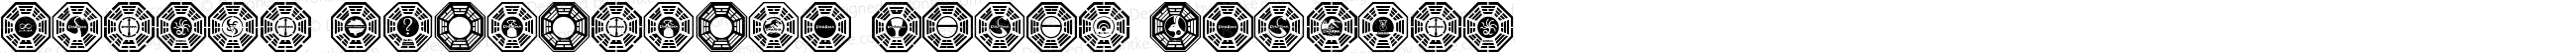 Dharma Initiative Logos